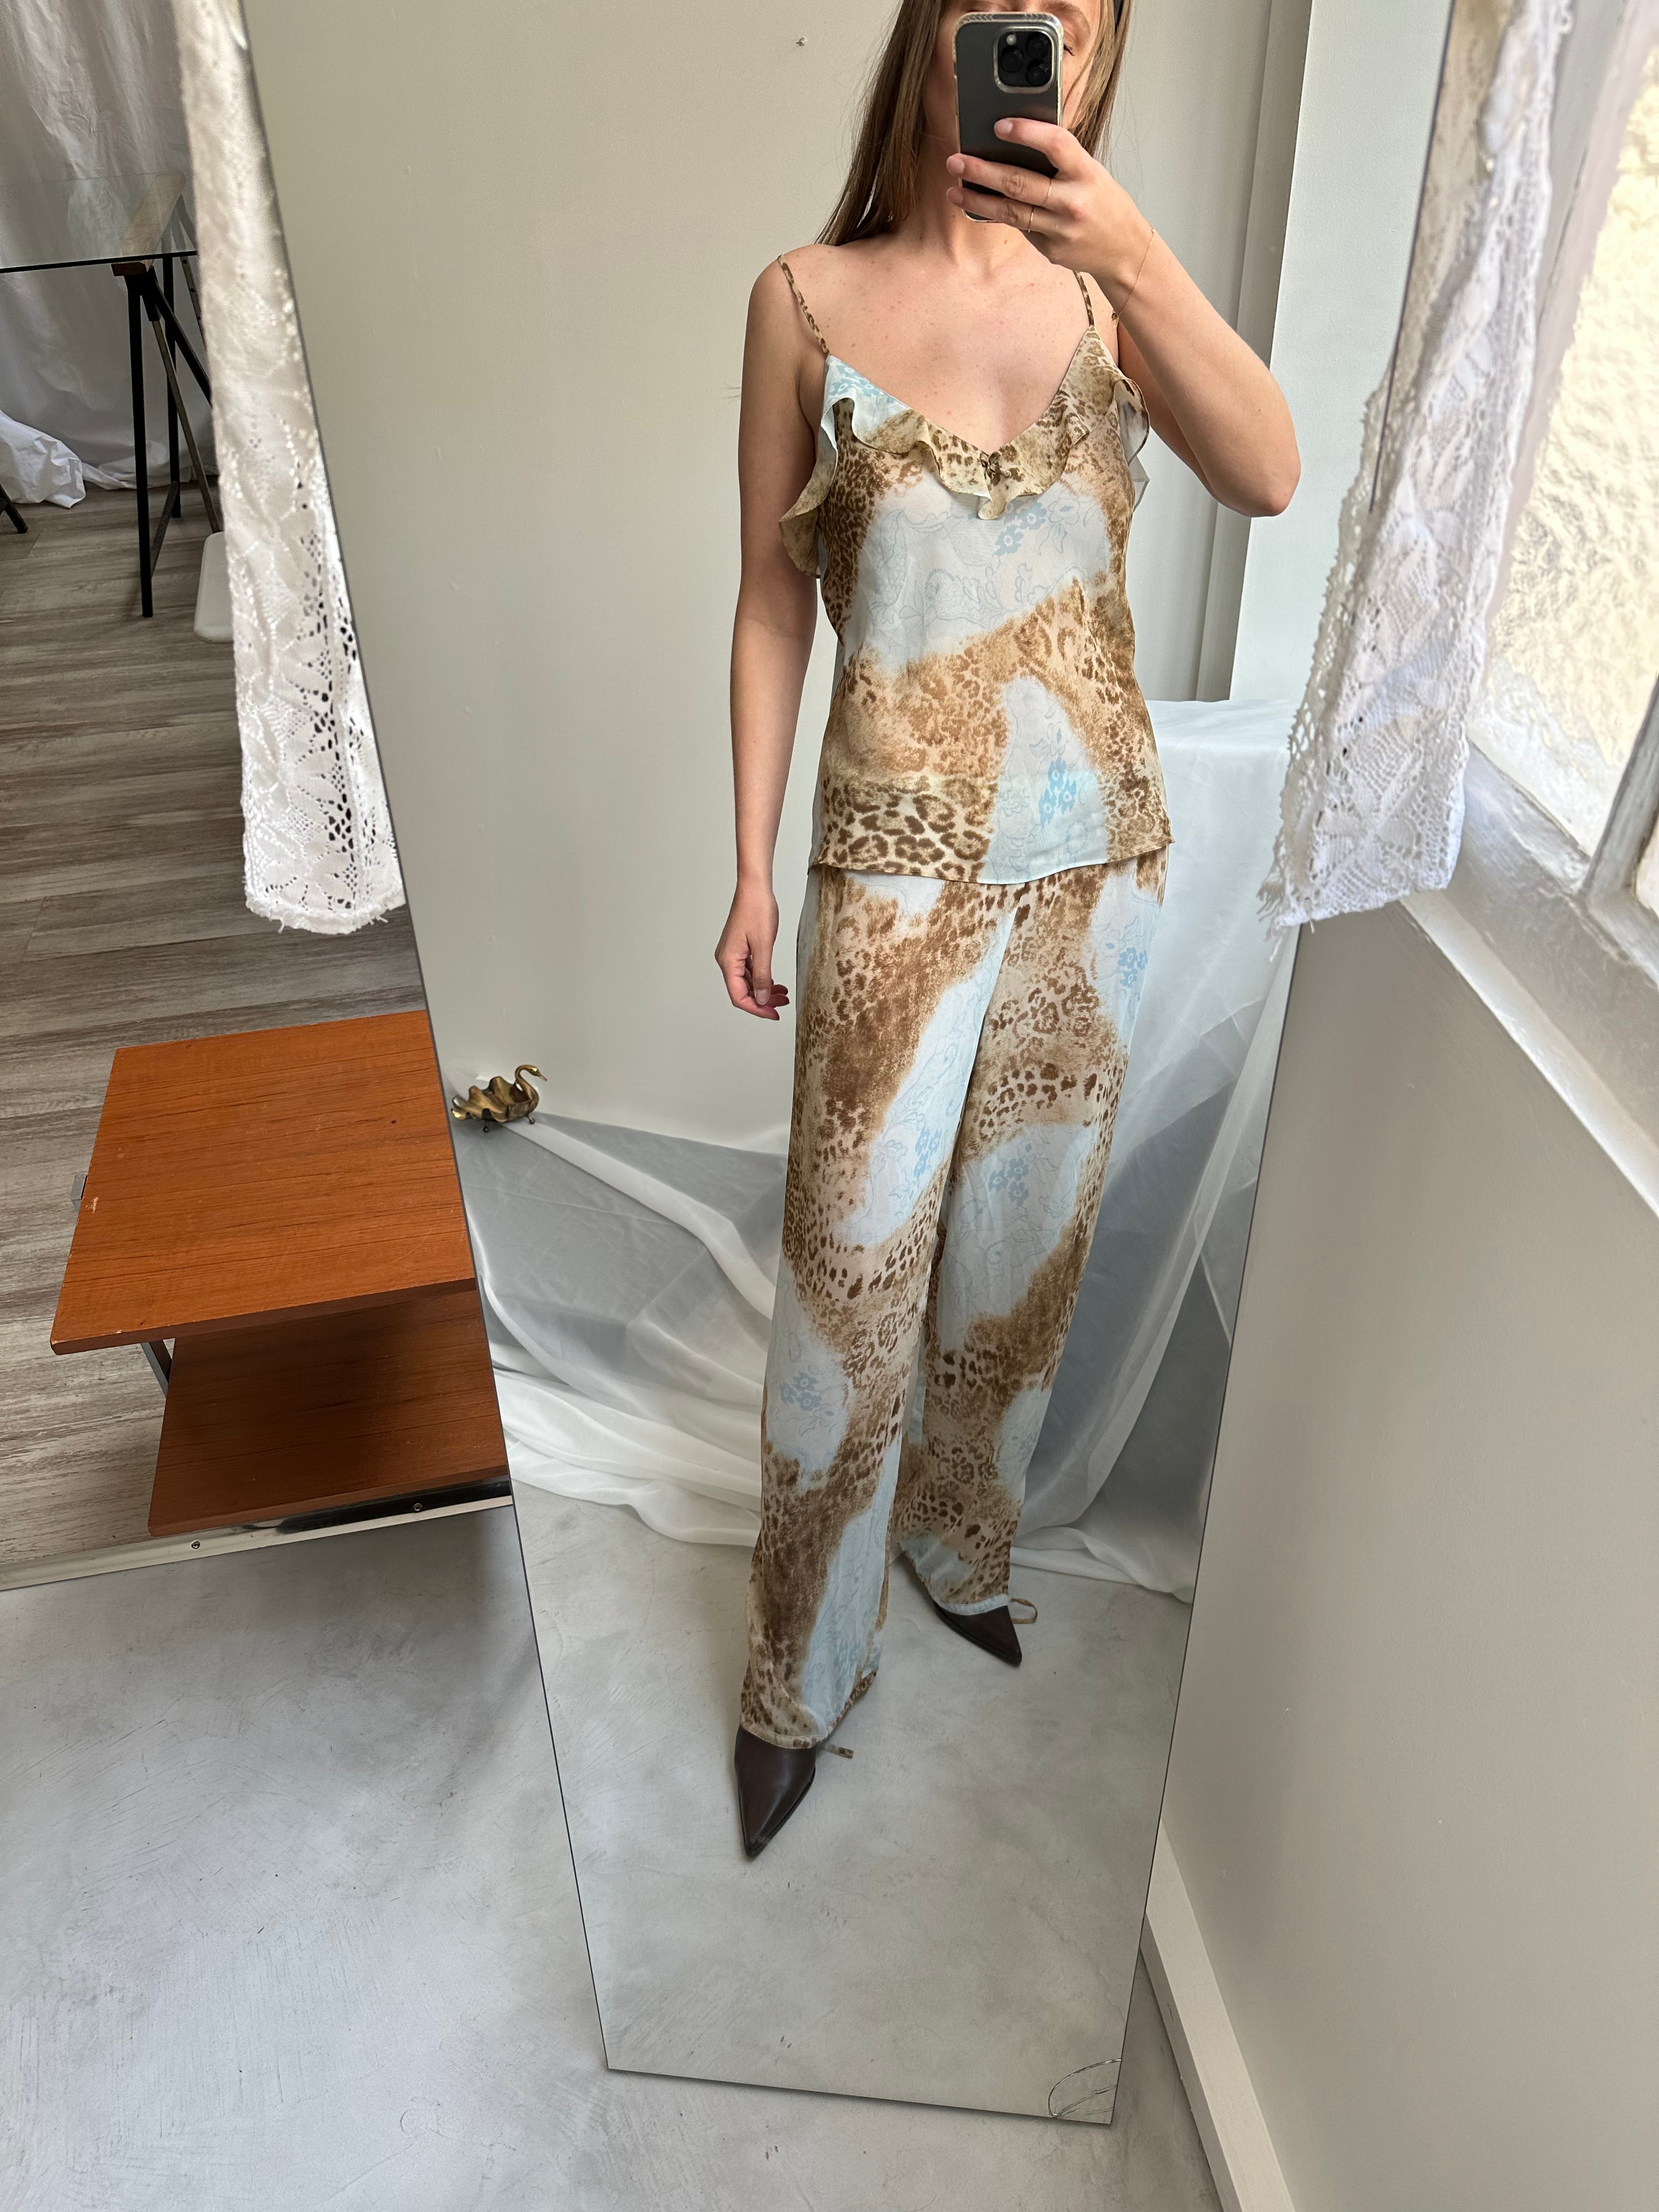 Woman taking mirror selfie wearing an eco responsible vintage leopard print set. 